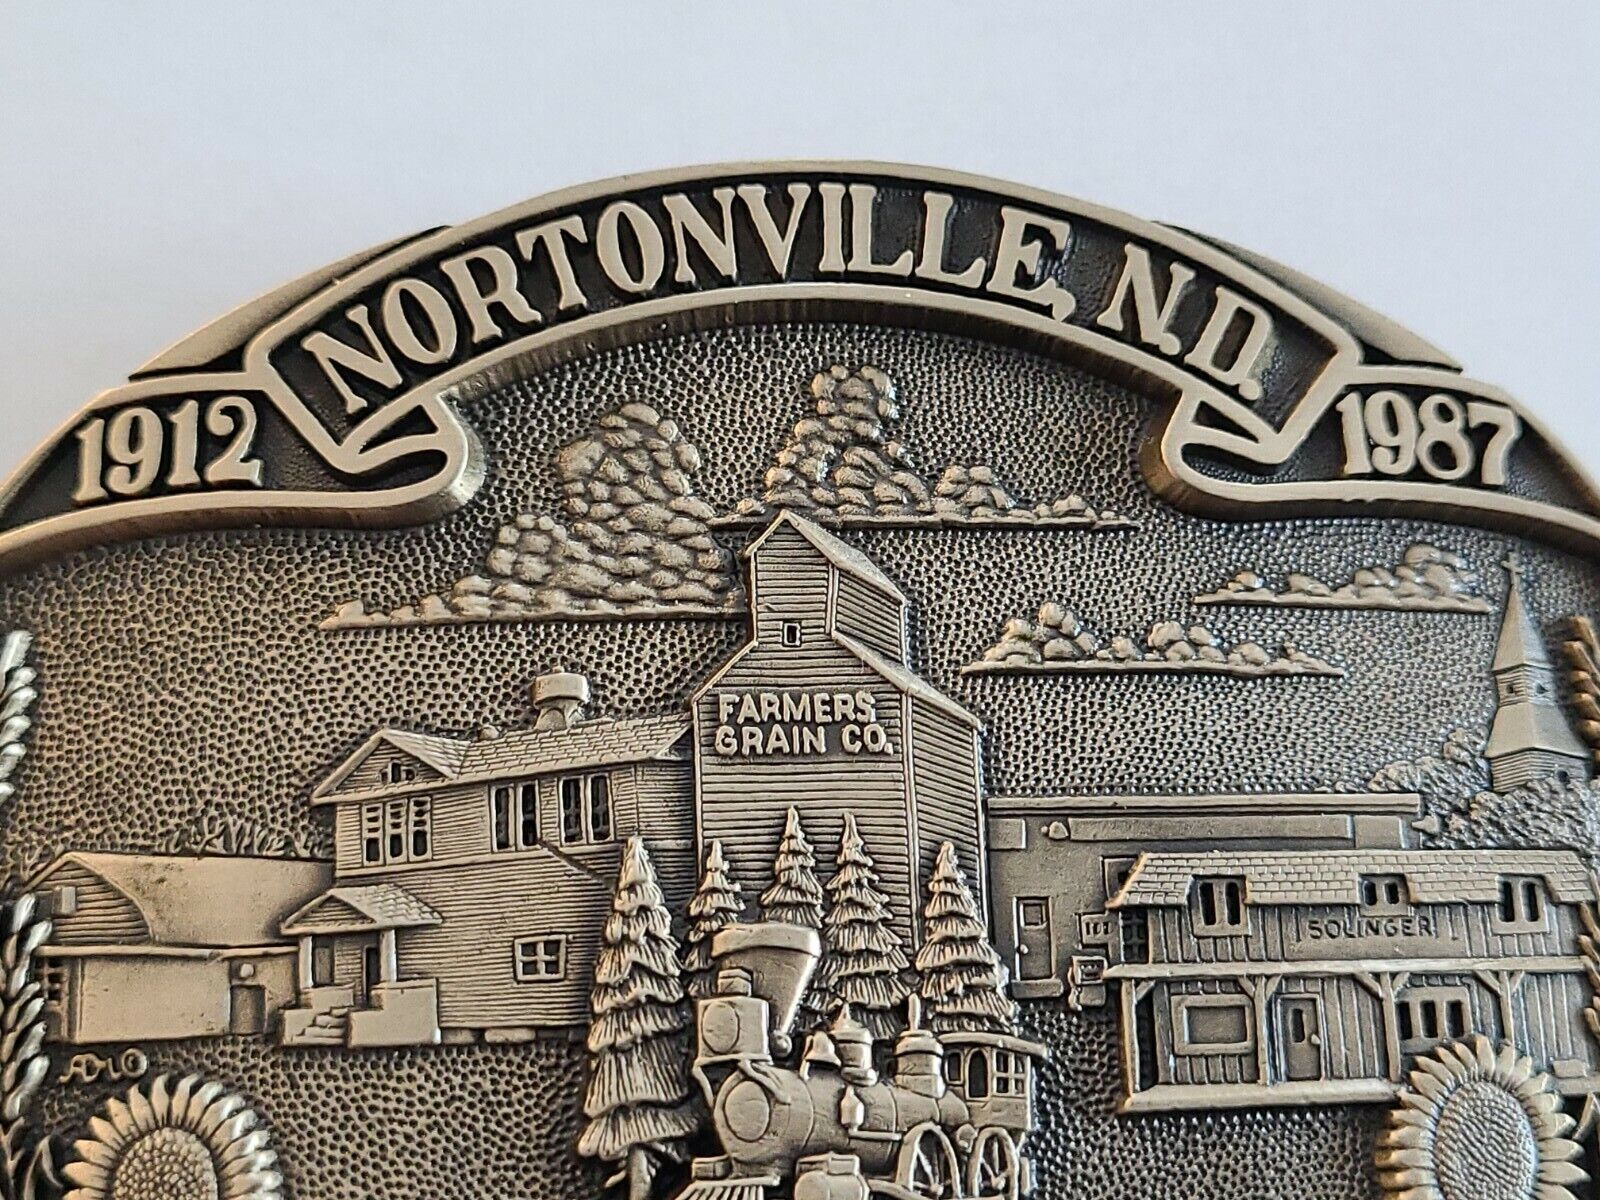 VTG North Dakota Belt Buckle Nortonville 1912-1987 75th Jubilee Solid Brass Mint Без бренда - фотография #2